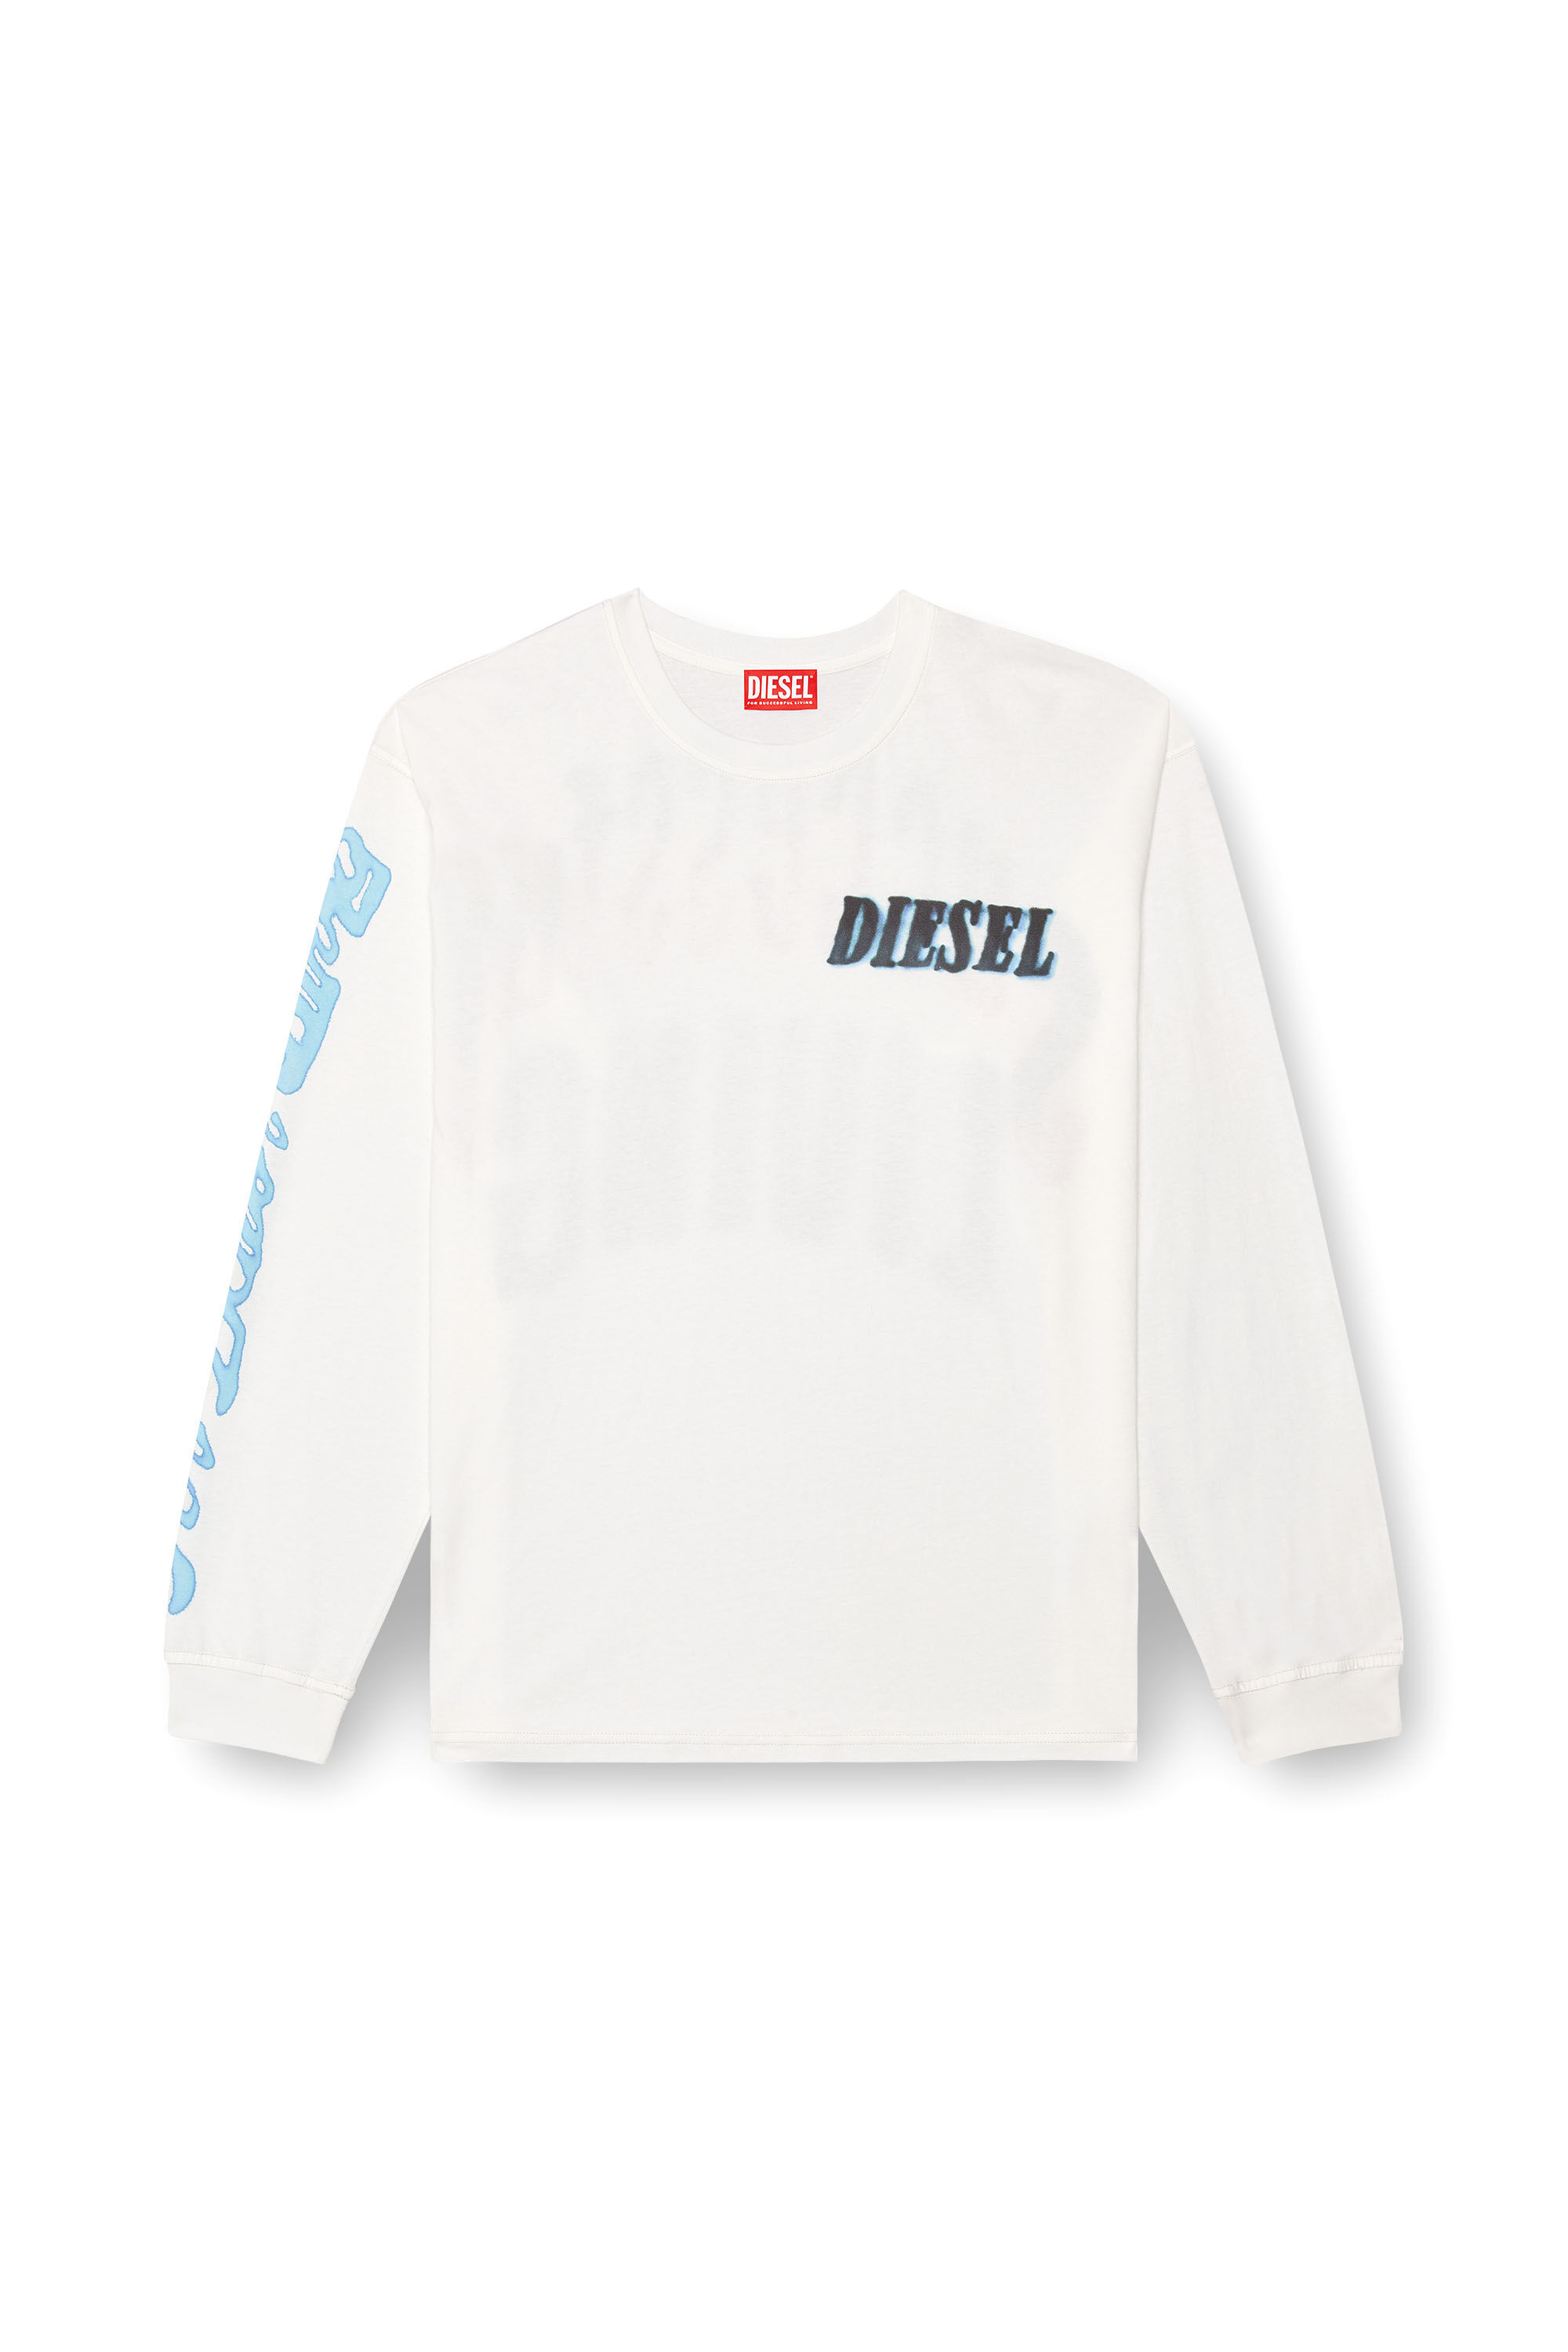 Diesel - T-BOXT-LS-Q15, Uomo T-shirt a maniche lunghe con stampe logo in Bianco - Image 2